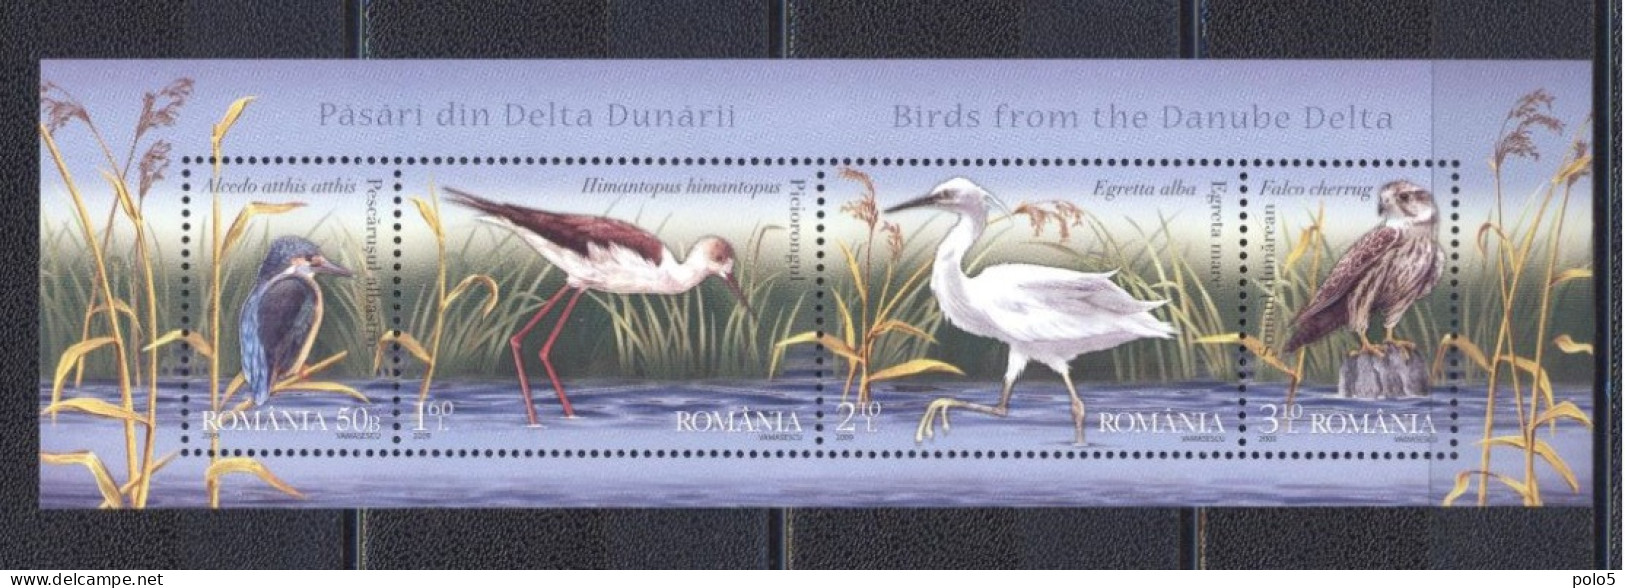 Romania 2009-Birds Of The Danube Delta M/Sheet - Unused Stamps